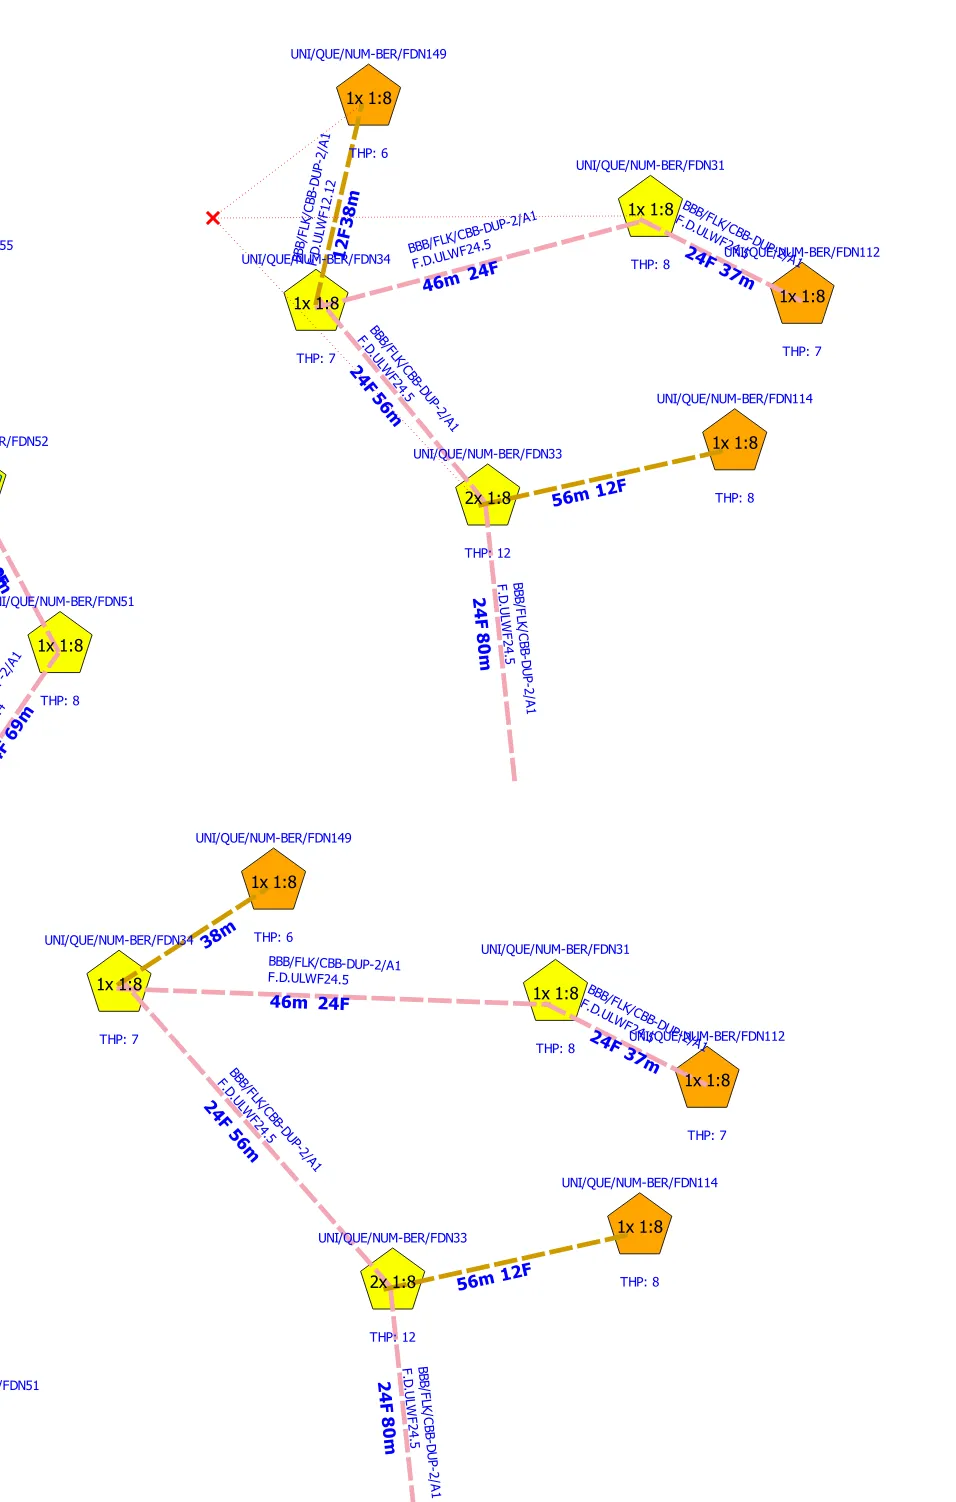 QGIS FTTx schematic topology editing